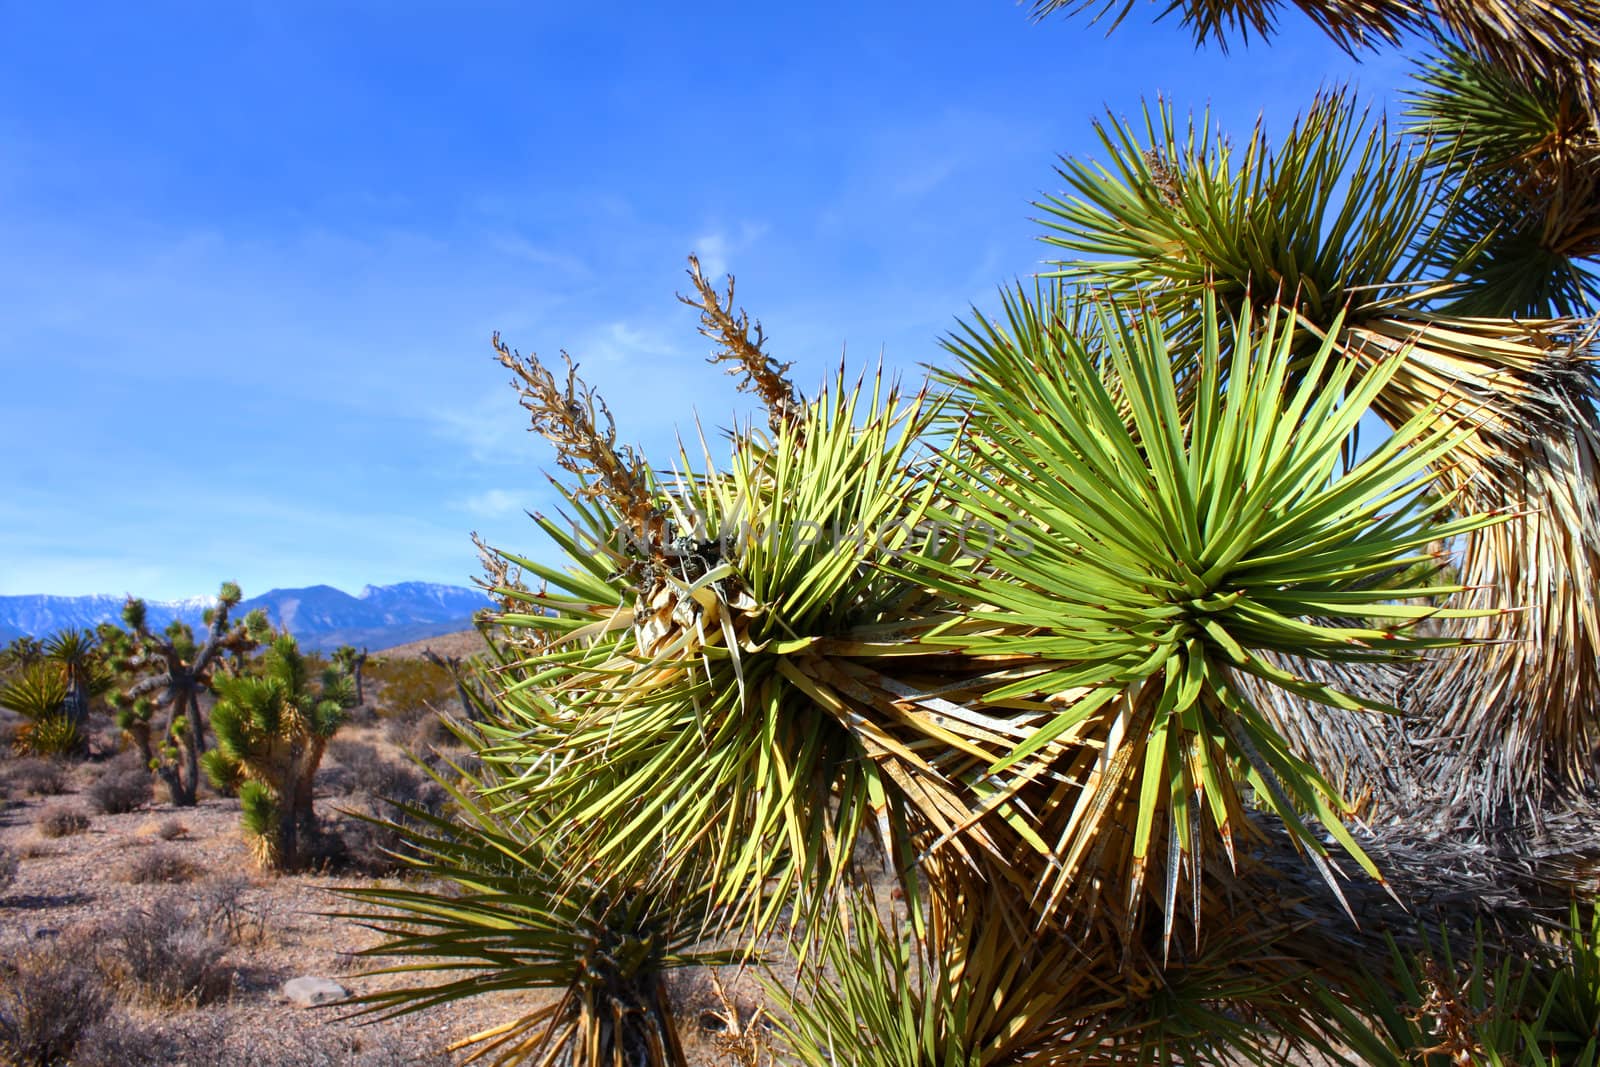 Joshua Tree (Yucca brevifolia) Nevada by Wirepec